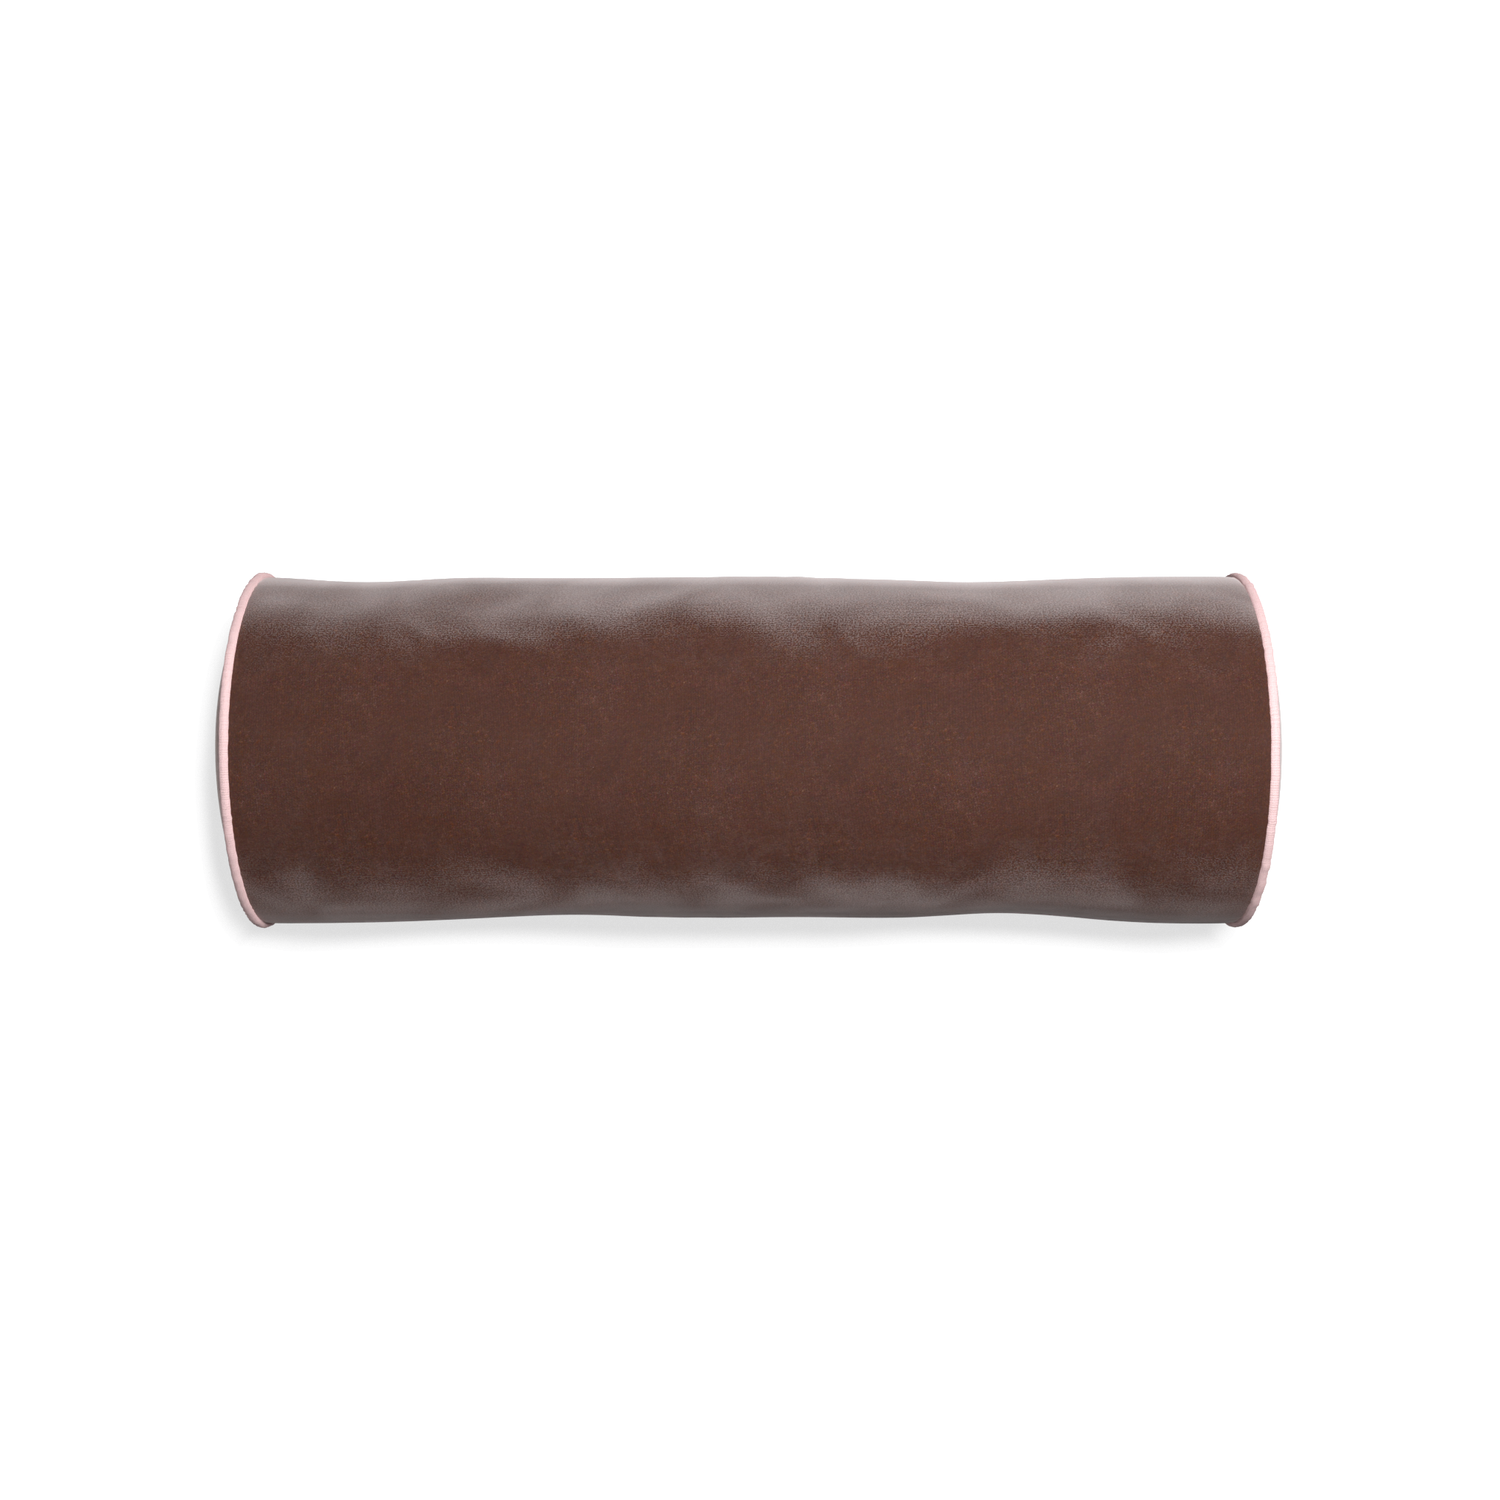 bolster brown velvet pillow with light pink piping